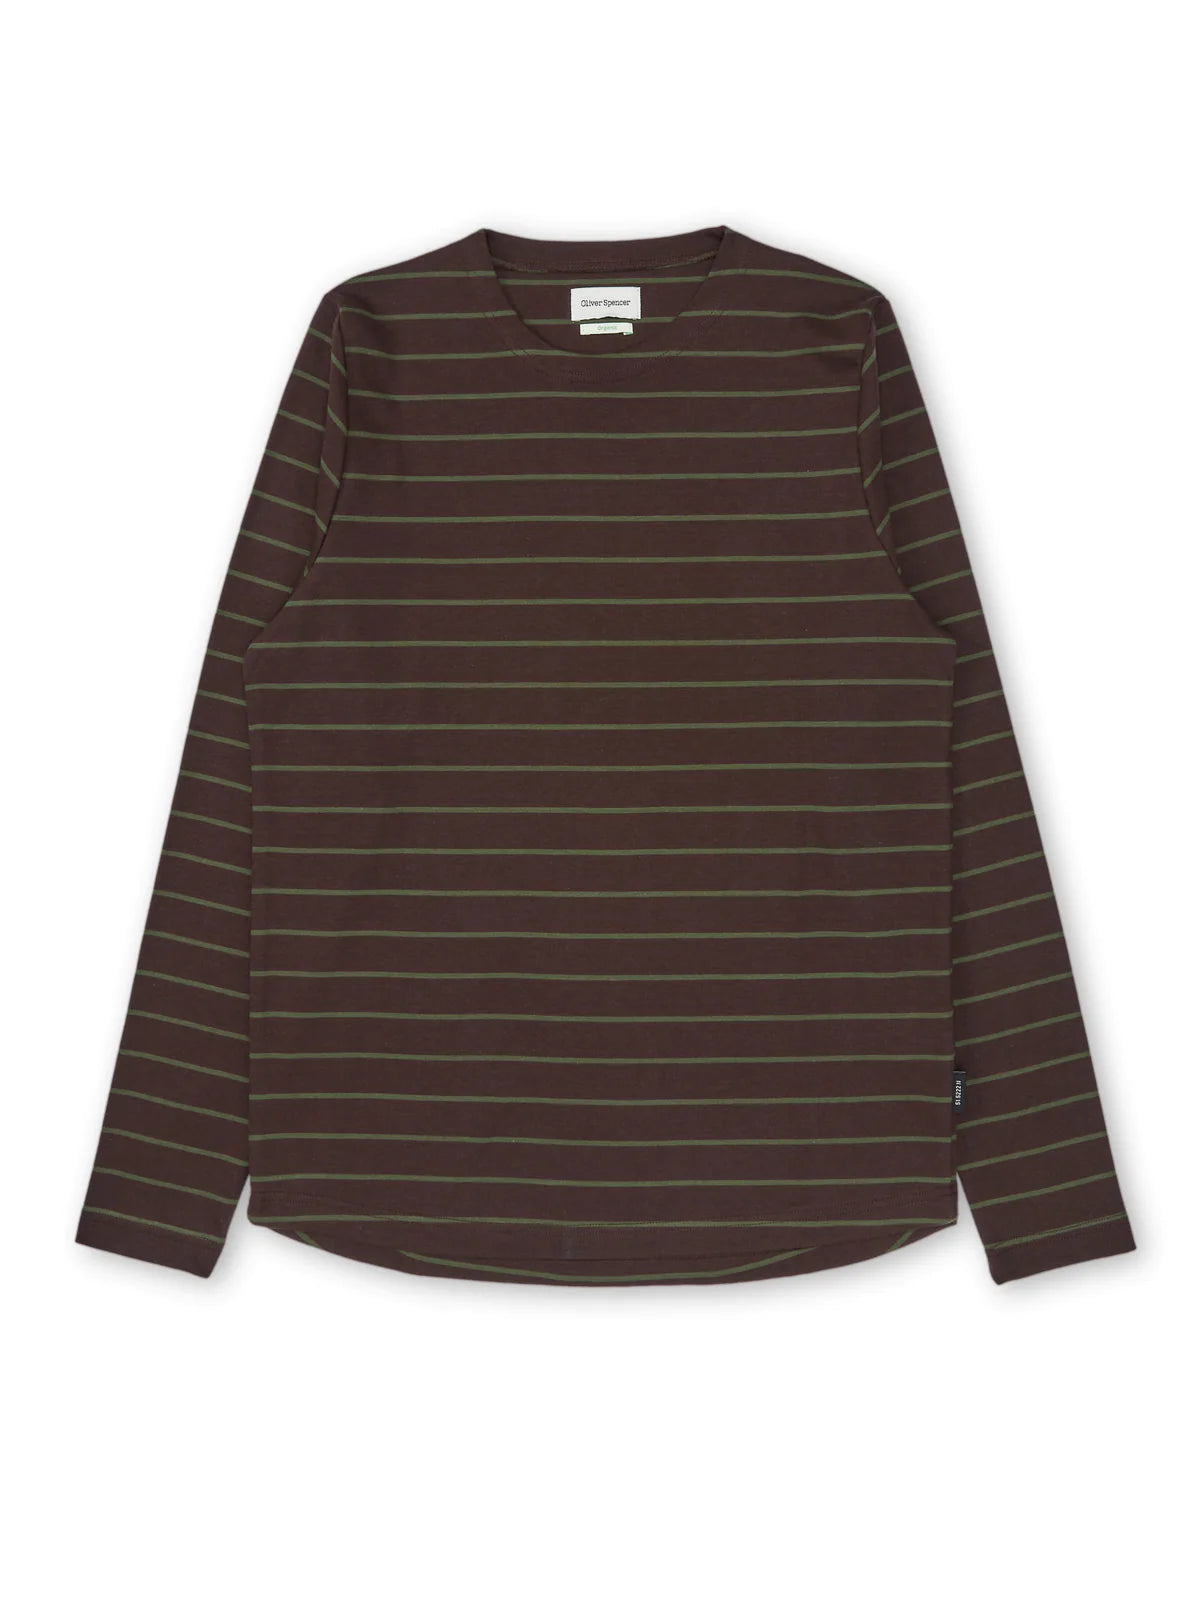 Newport Long Sleeve T-Shirt Briar Chocolate Brown